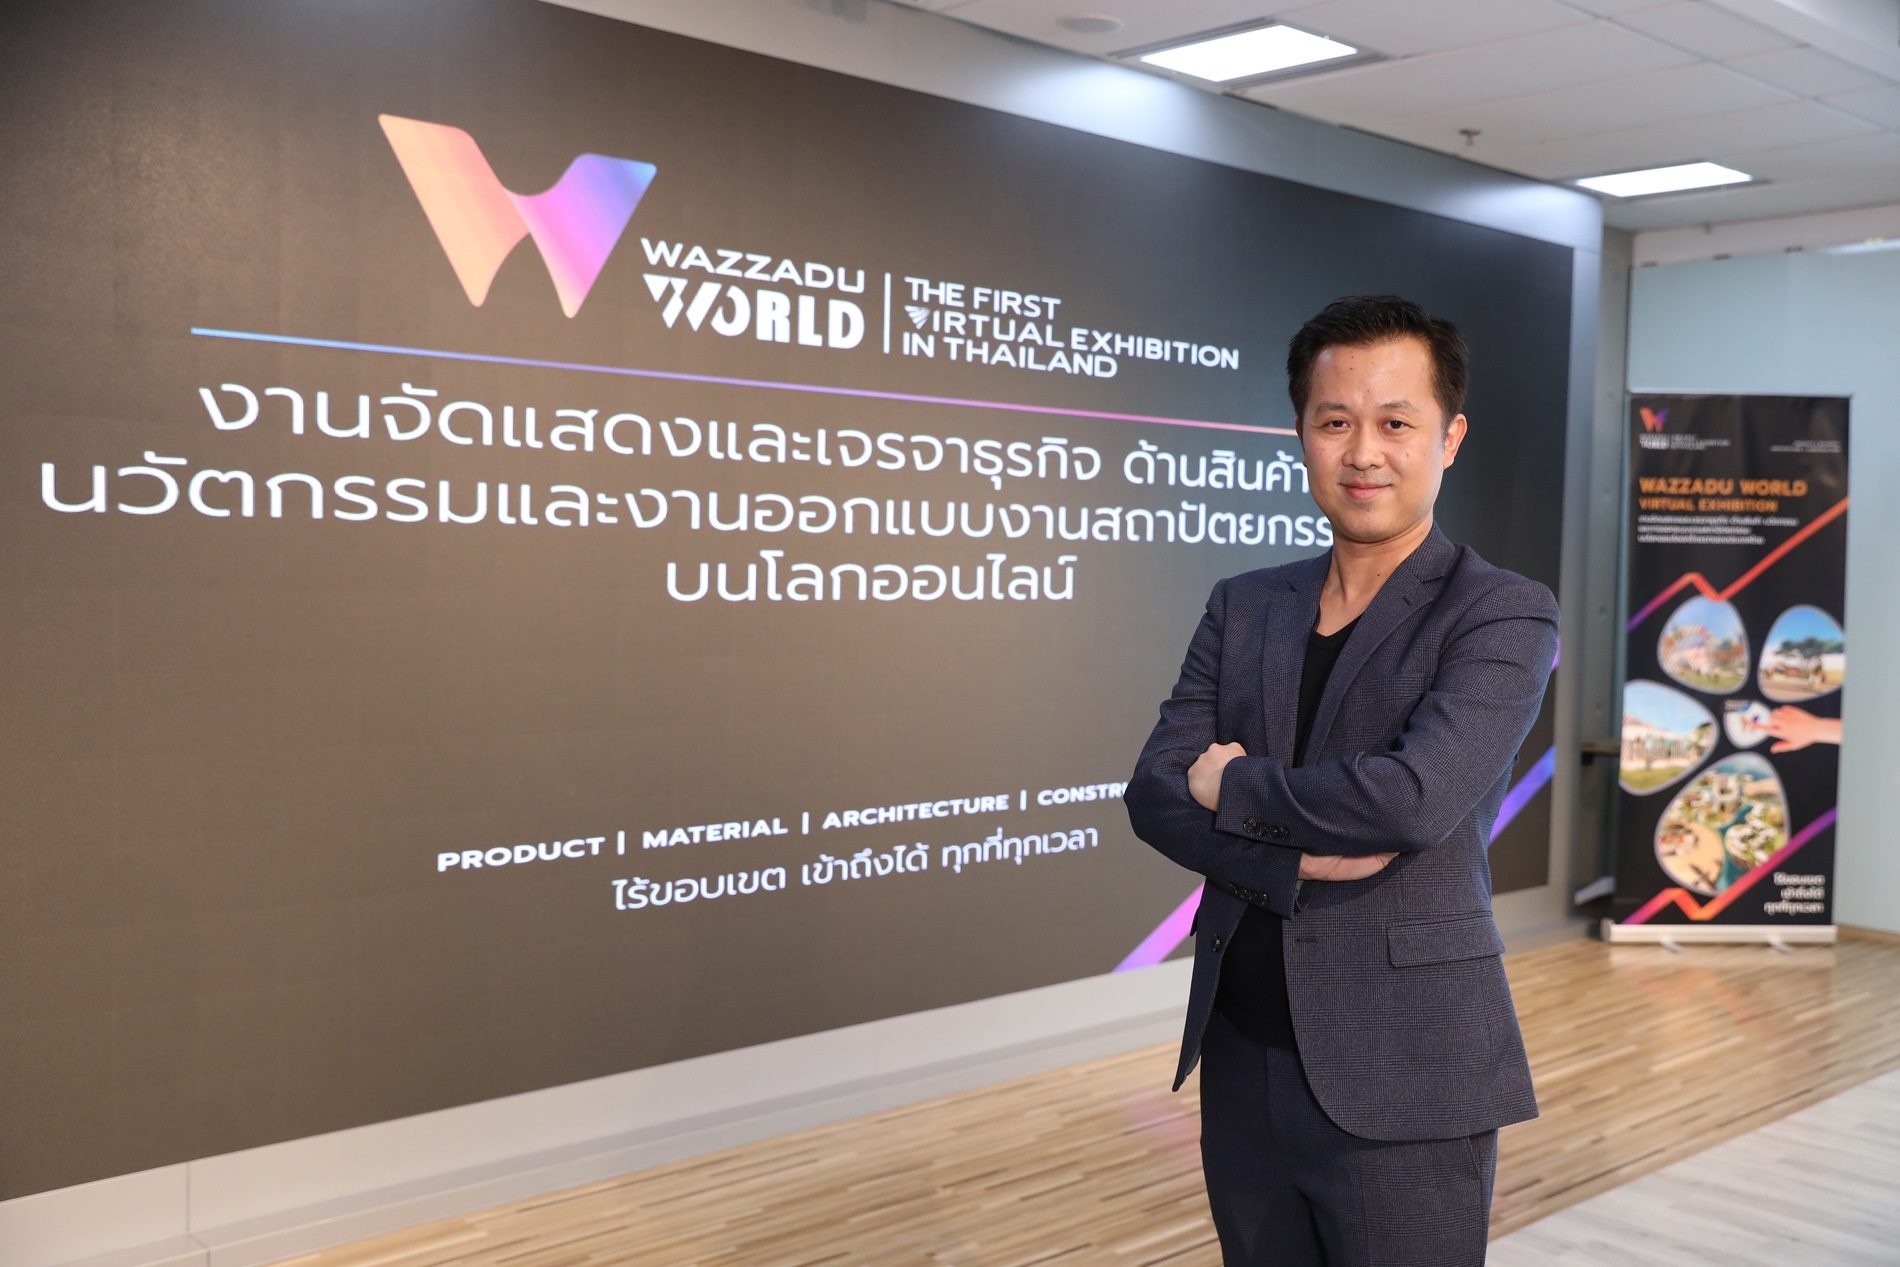 "Wazzadu.com” จัดงาน Virtual Exhibition บนโลกออนไลน์ครั้งแรกของไทย